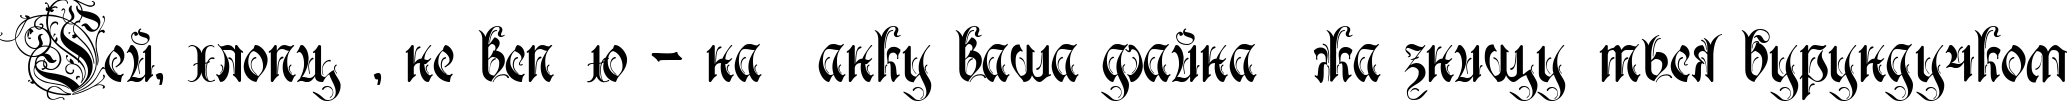 Пример написания шрифтом Rurintania текста на украинском